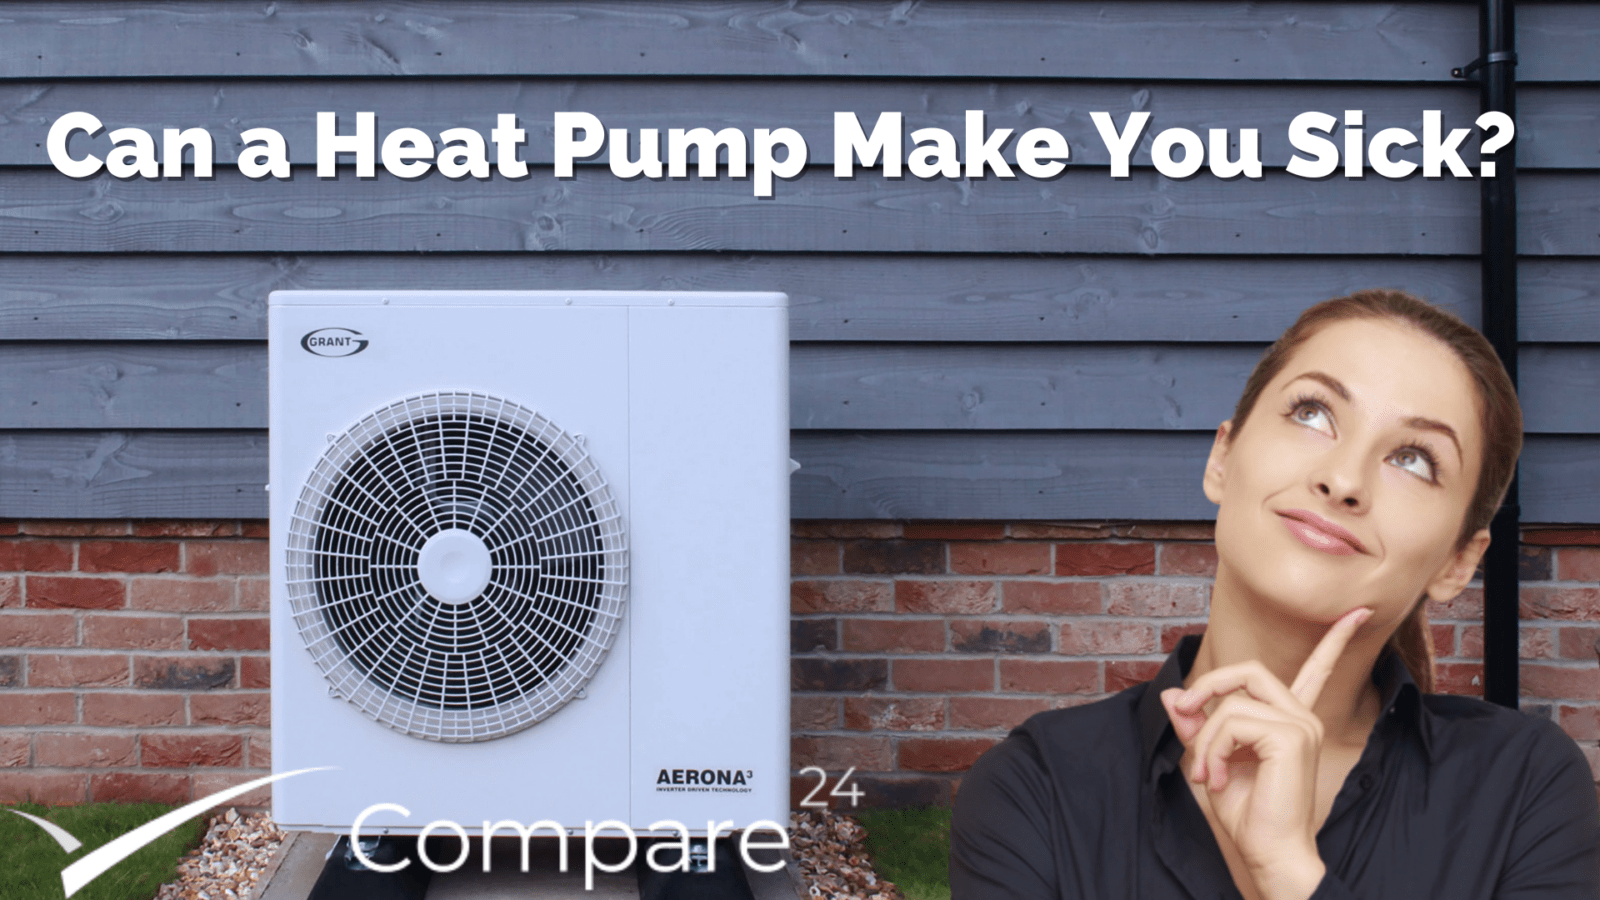 Heat Pump Risks: Can a Heat Pump Make People Sick?